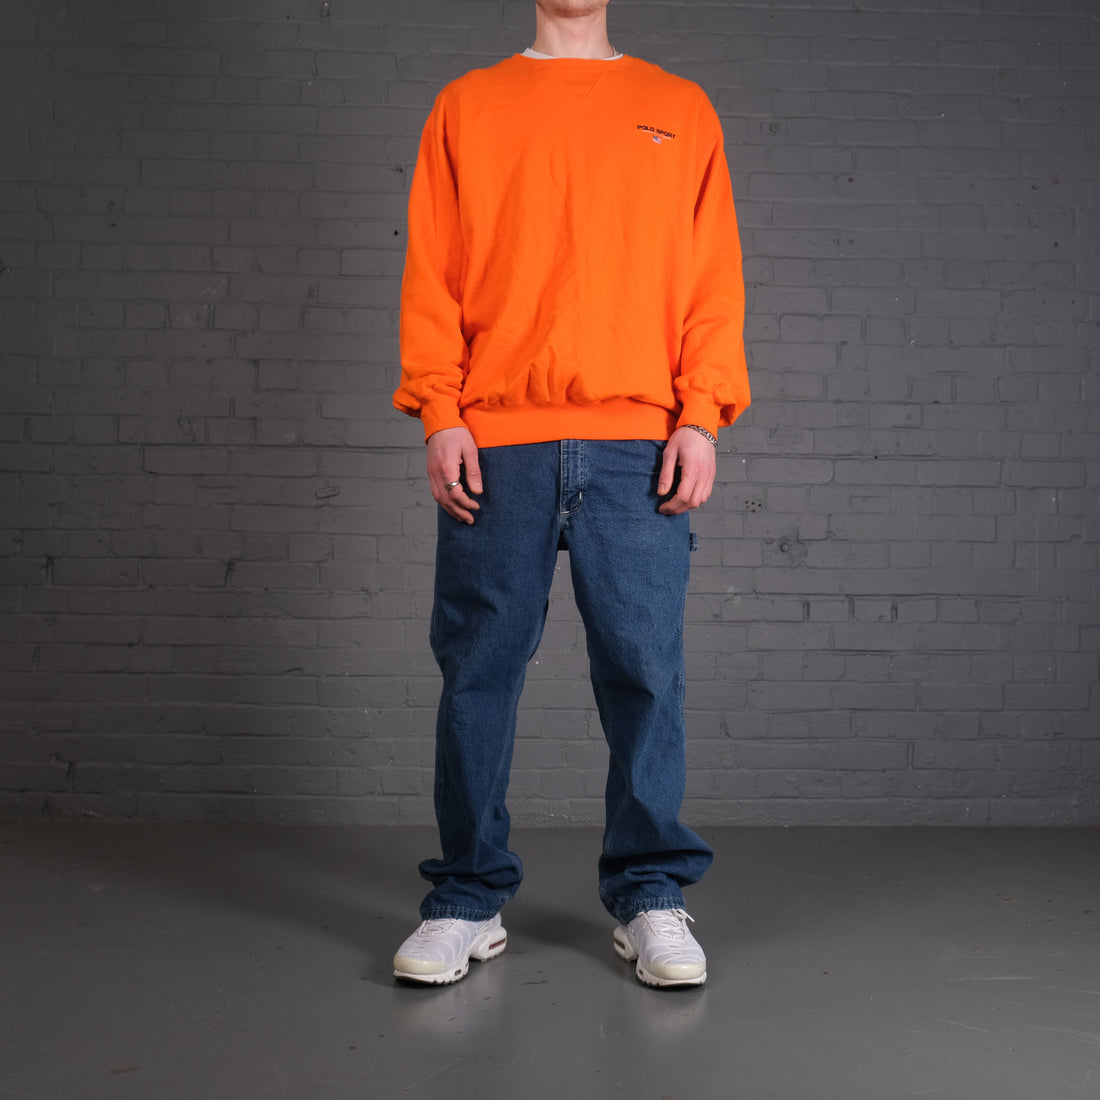 Vintage Polo Sport sweatshirt in orange